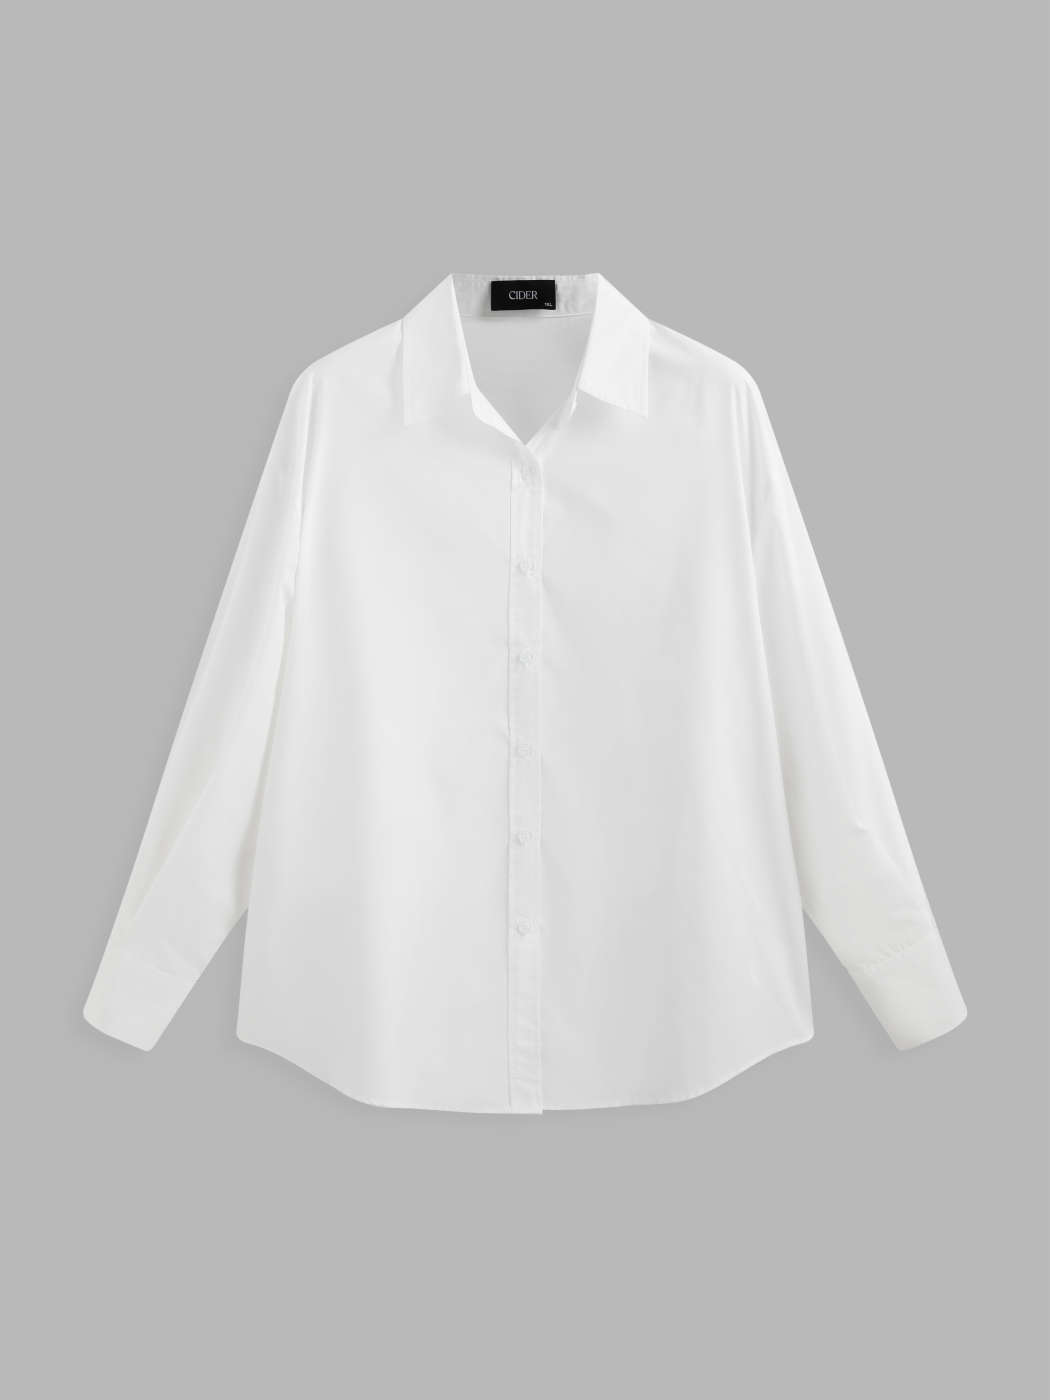 Buy Women White Solid Long Sleeves Shirt Online - 738318